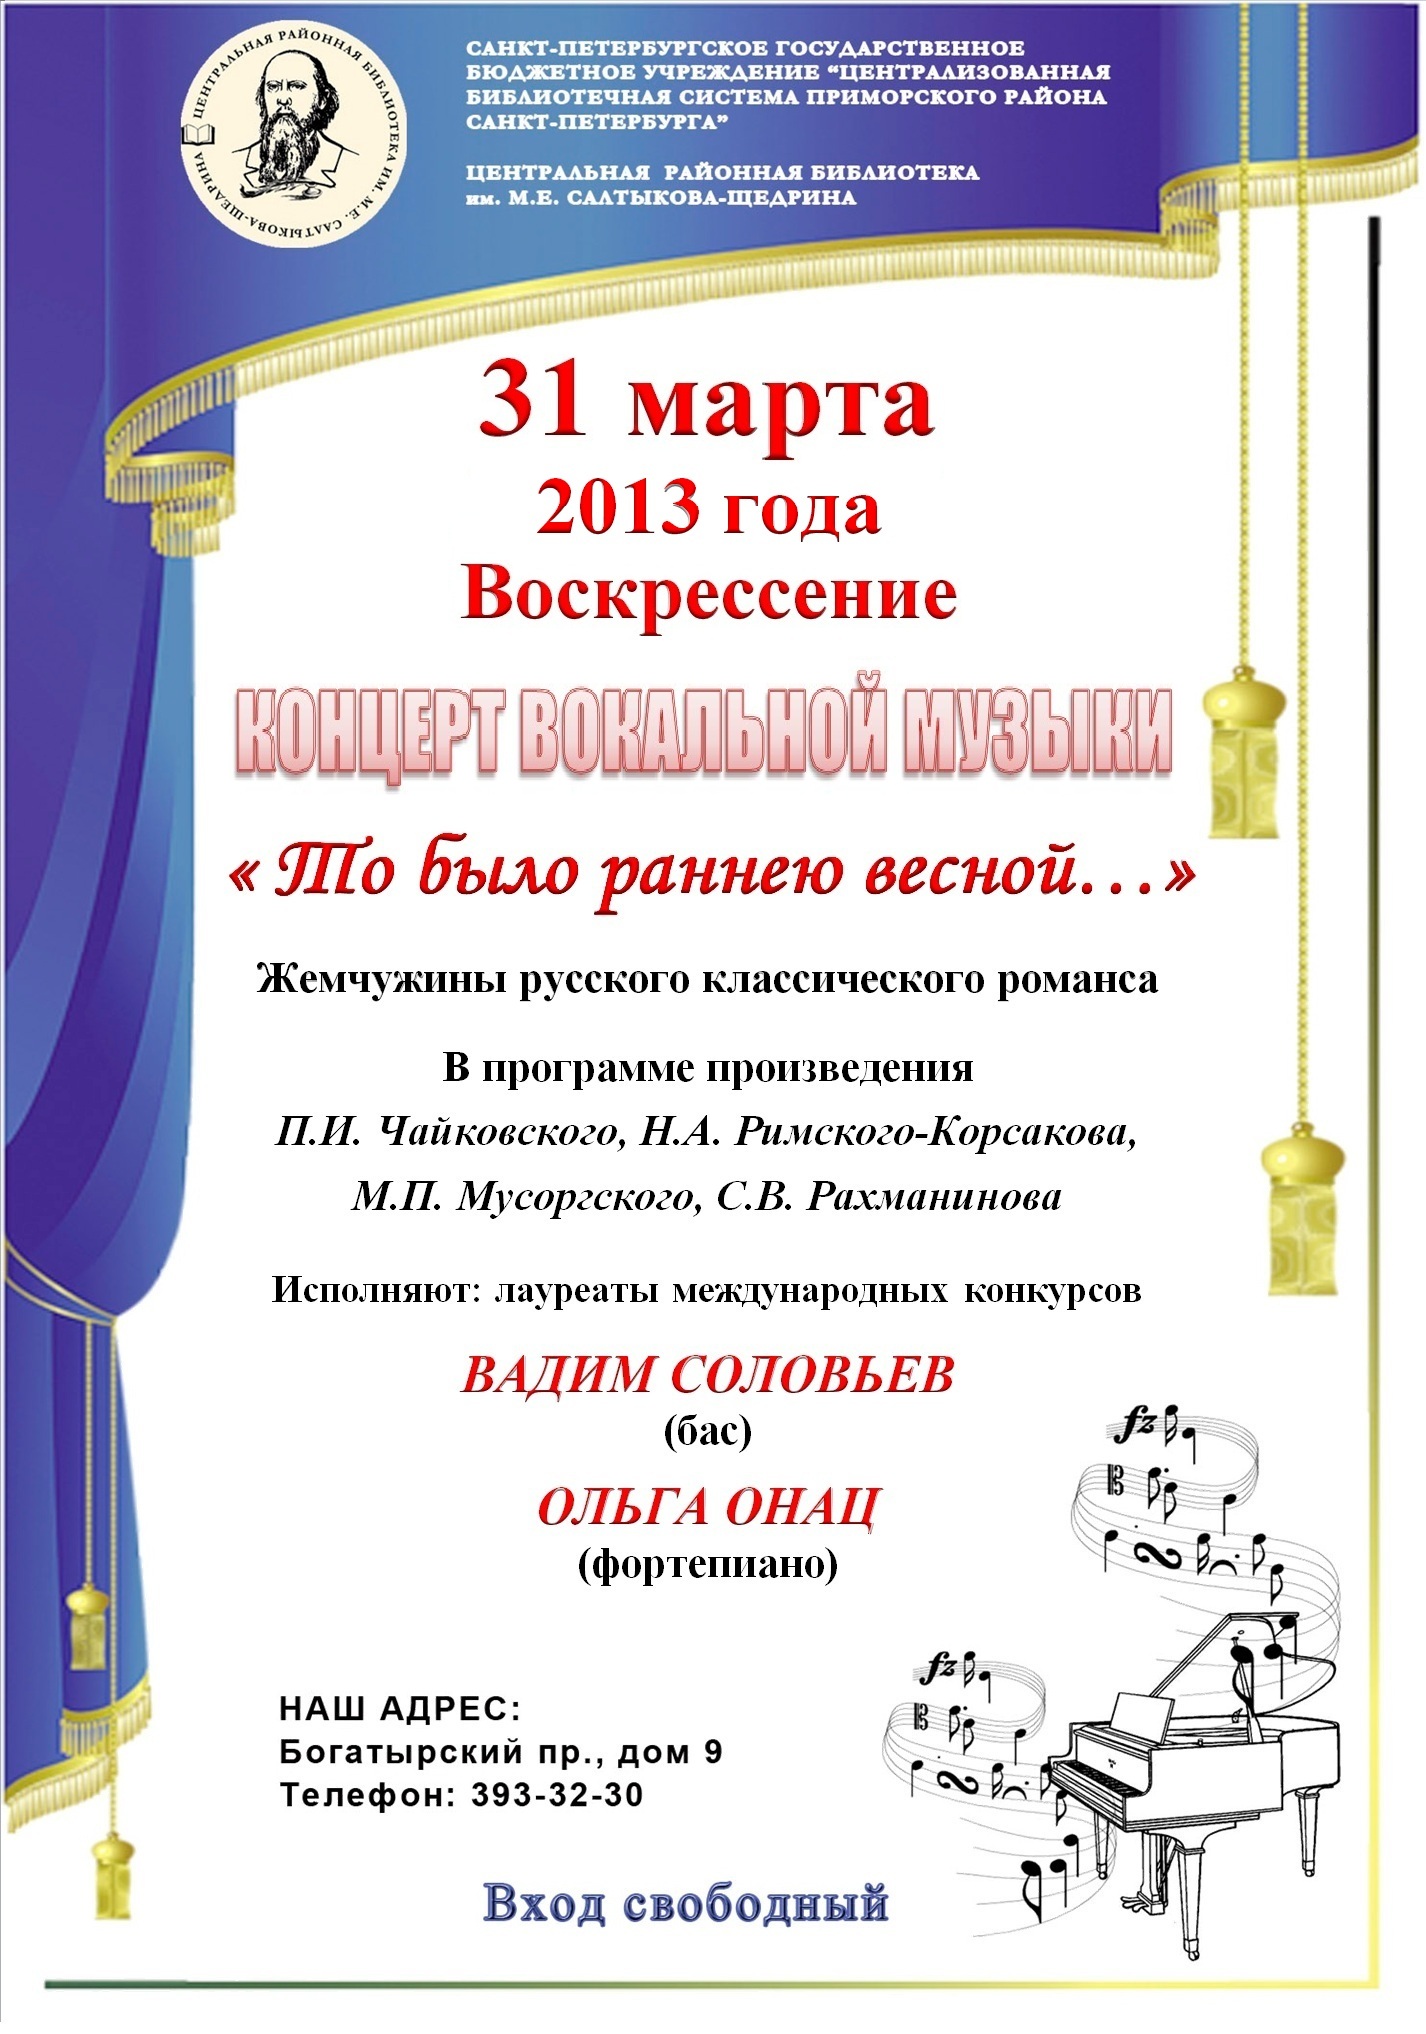 Афиша концерта в библиотеке им. Салтыкова-Щедрина